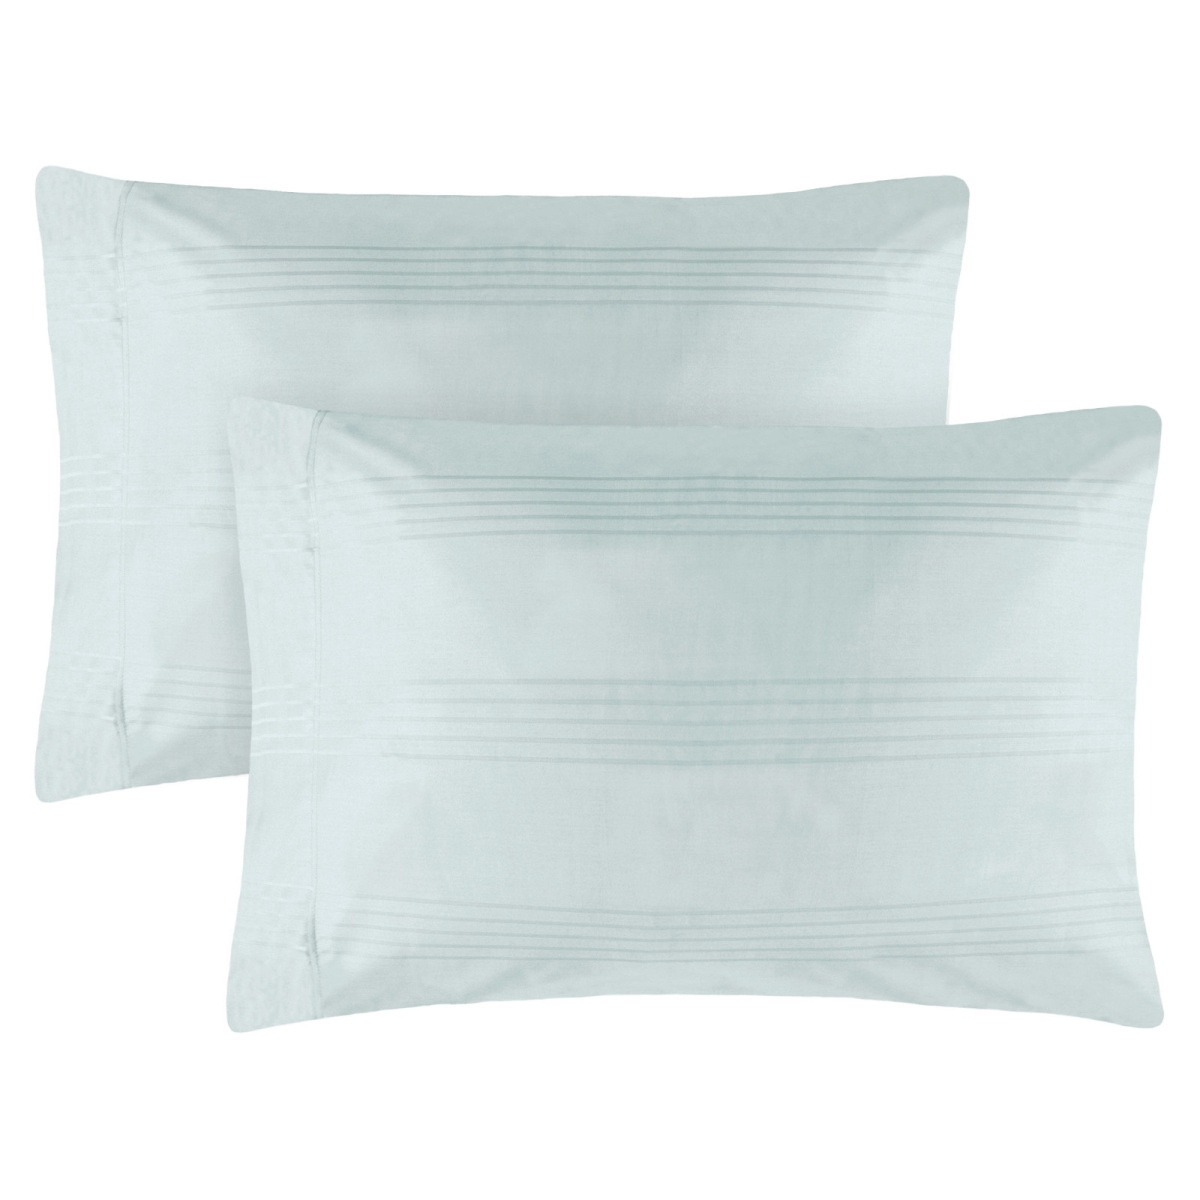 Yms008223 Premium 420 Thread Count 100 Percent Cotton Pillowcase Set, Spa Blue - Standard - 2 Piece